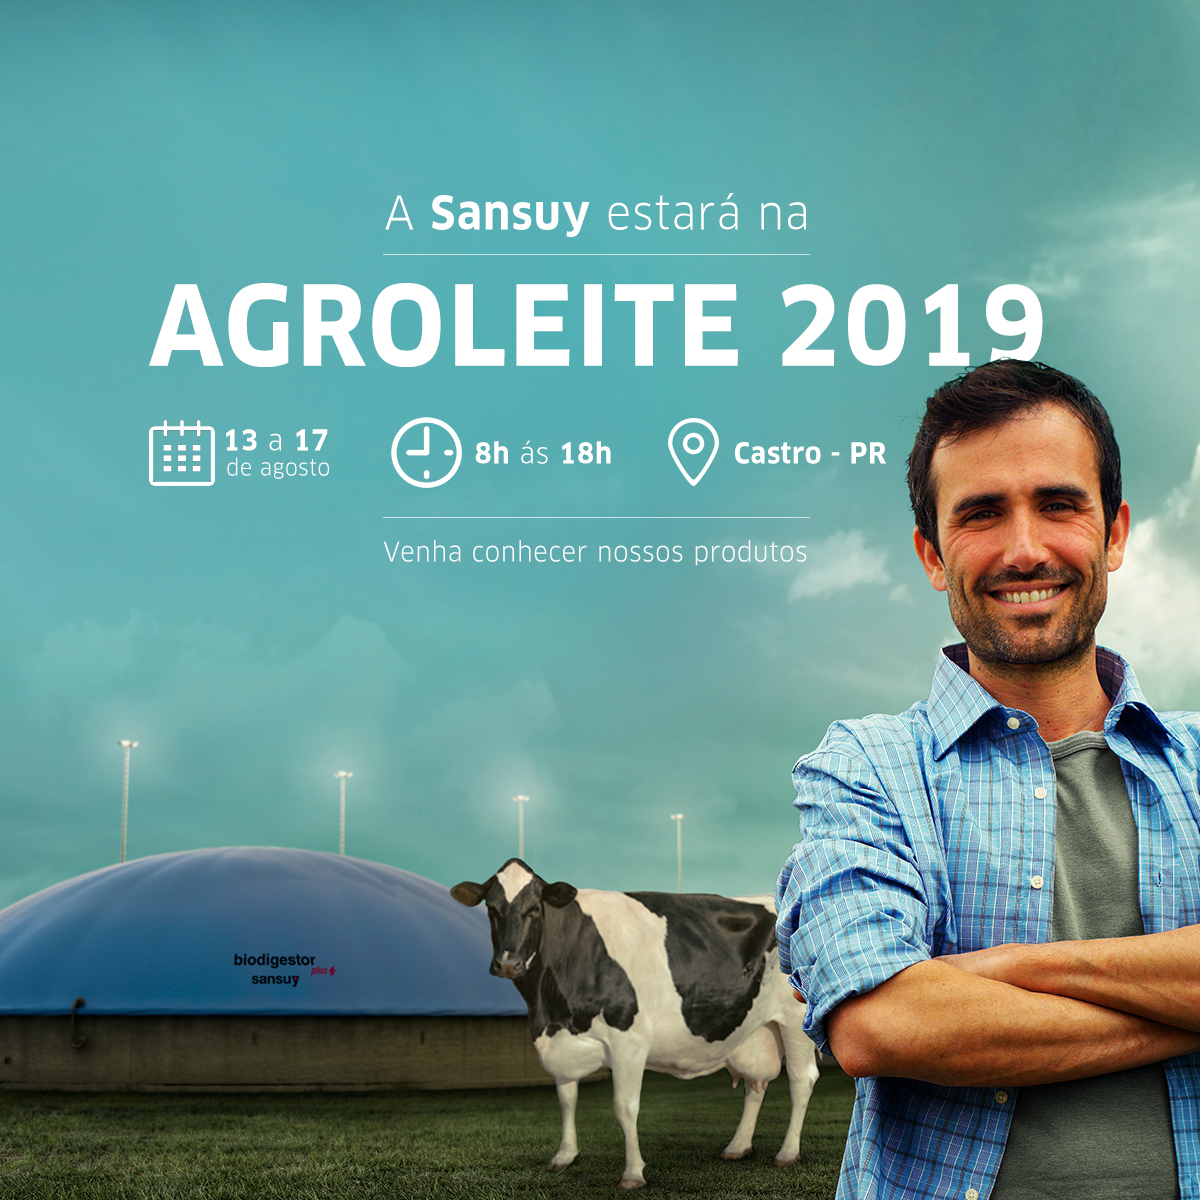 Agroleite 2019